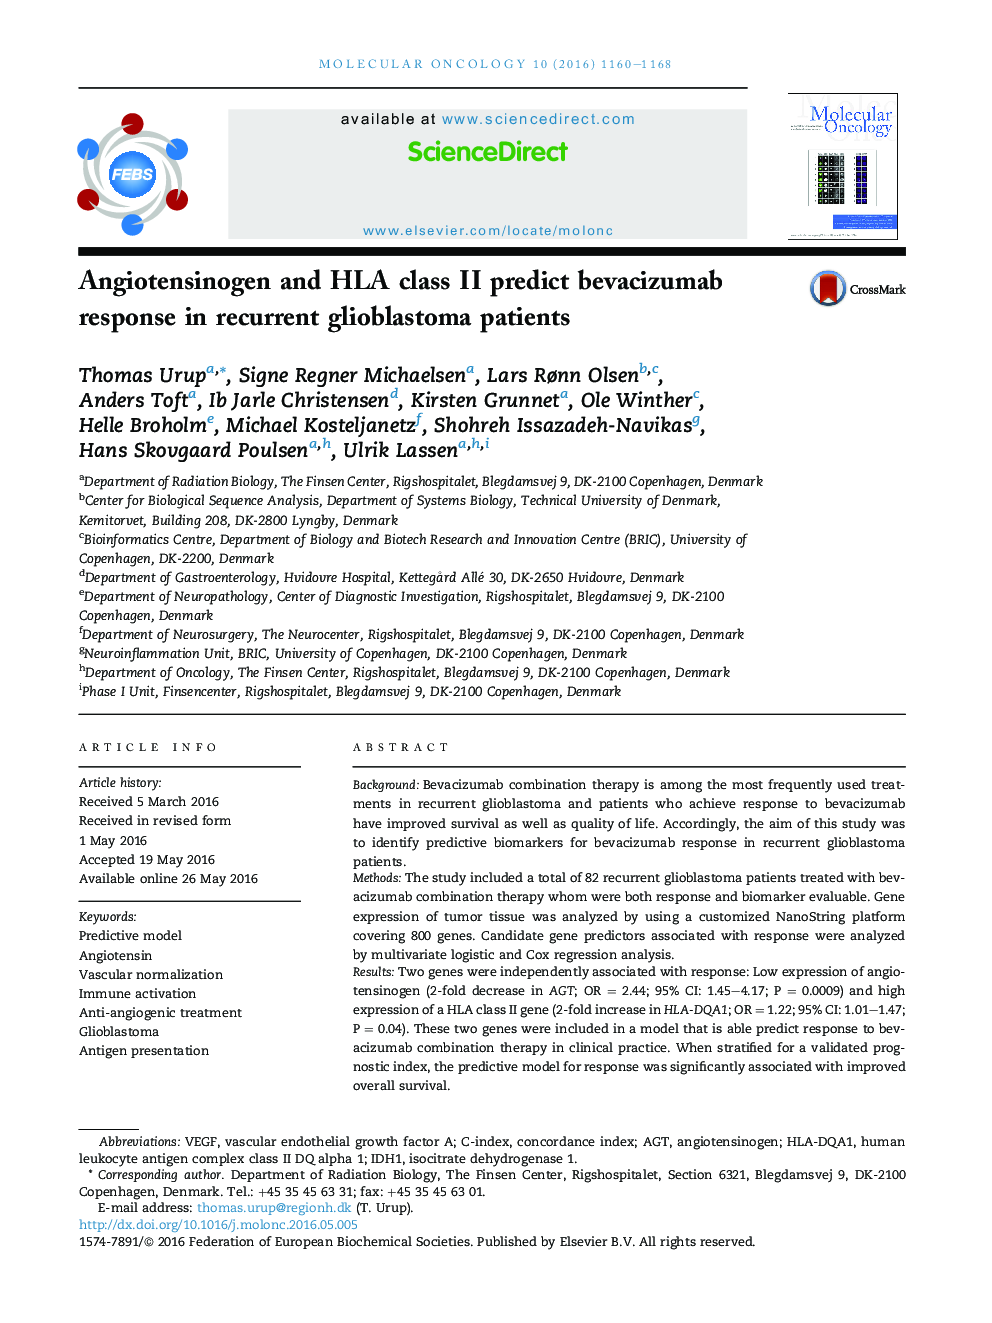 Angiotensinogen and HLA class II predict bevacizumab response in recurrent glioblastoma patients